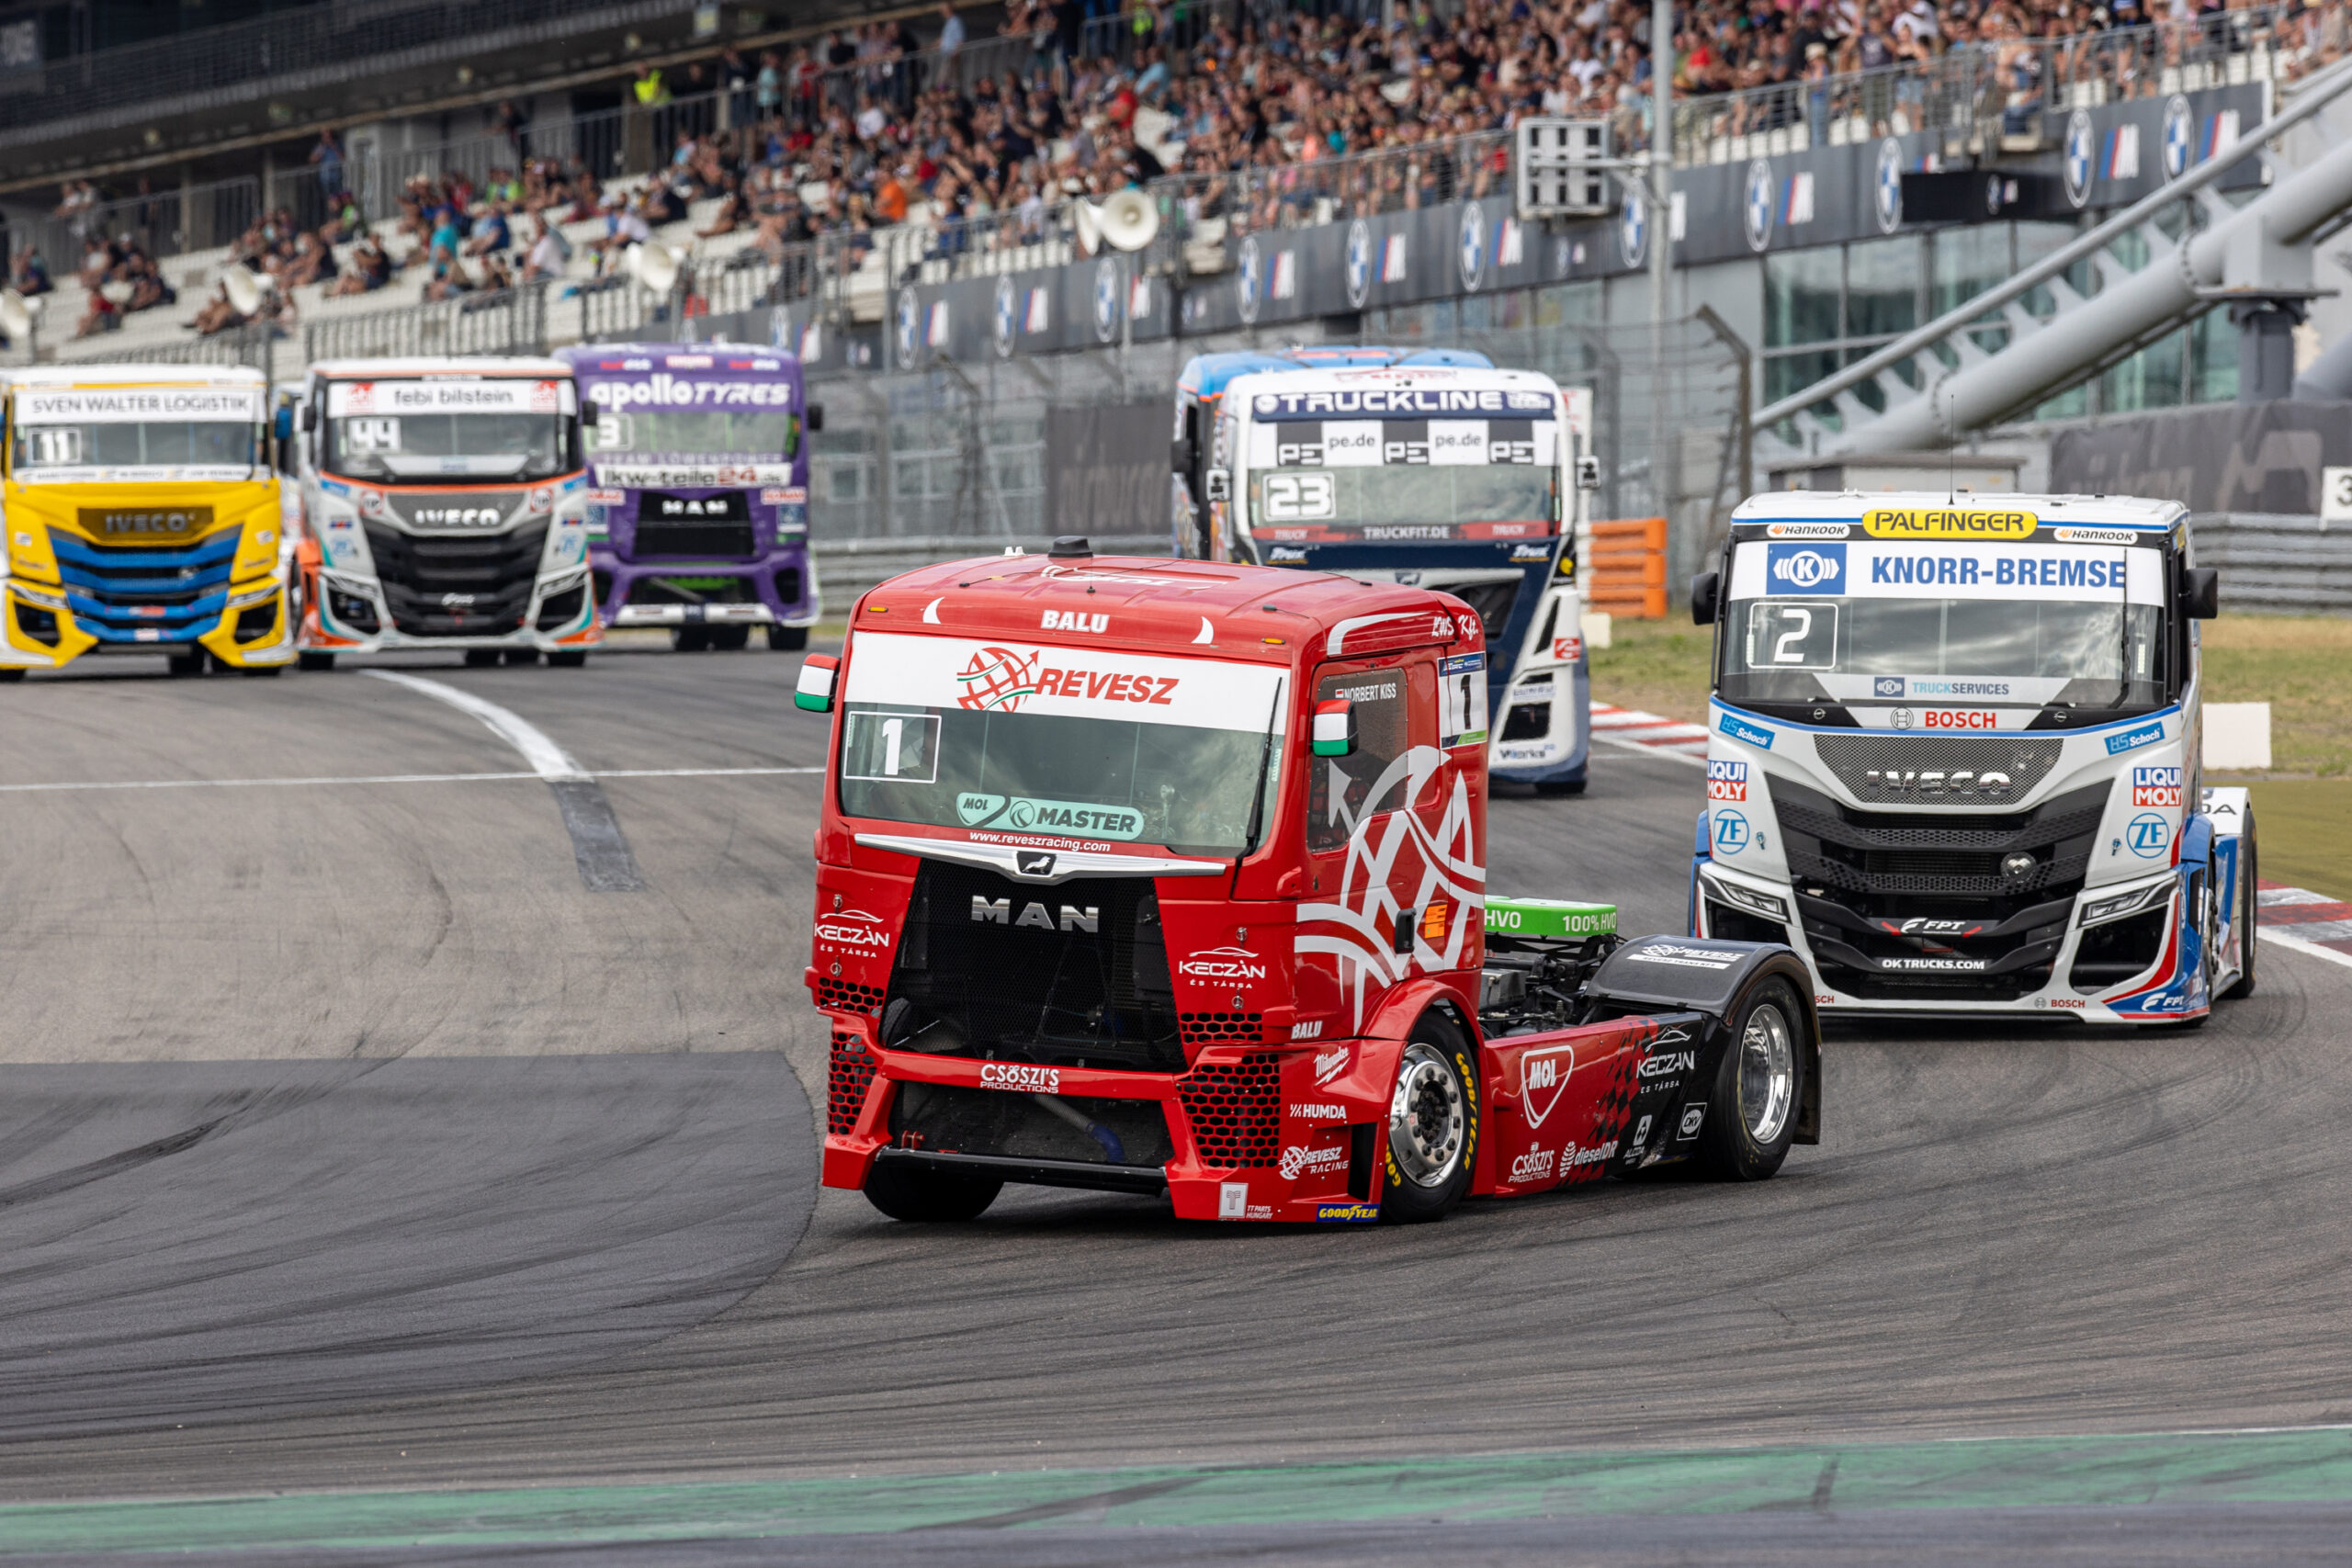 Truck-Grand-Prix 2019: V8-Sonderedition von Scania - ADAC Truck Grand Prix, News